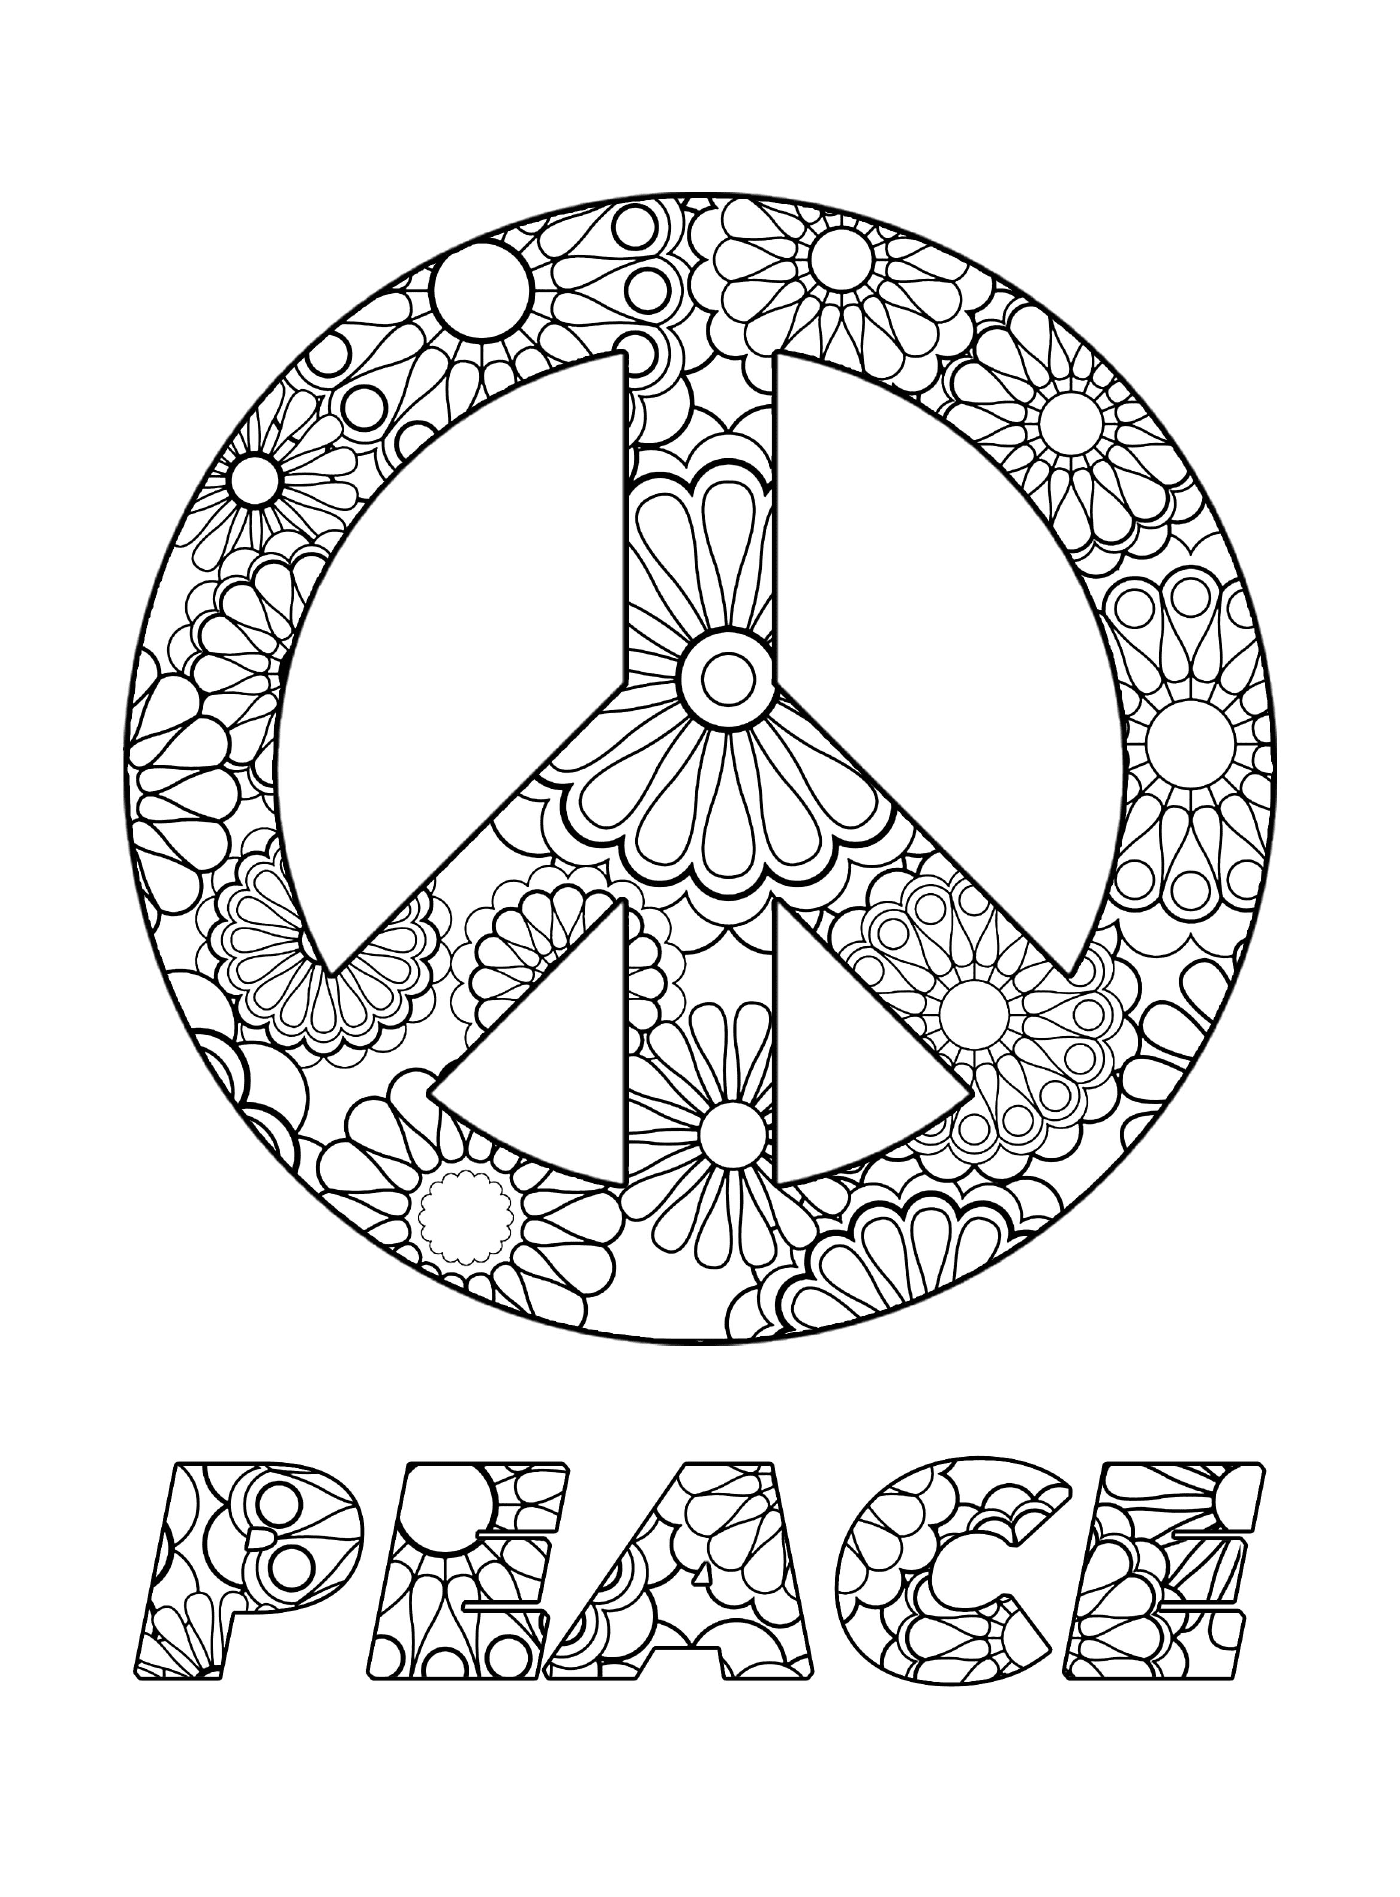  Símbolo de paz con flores 